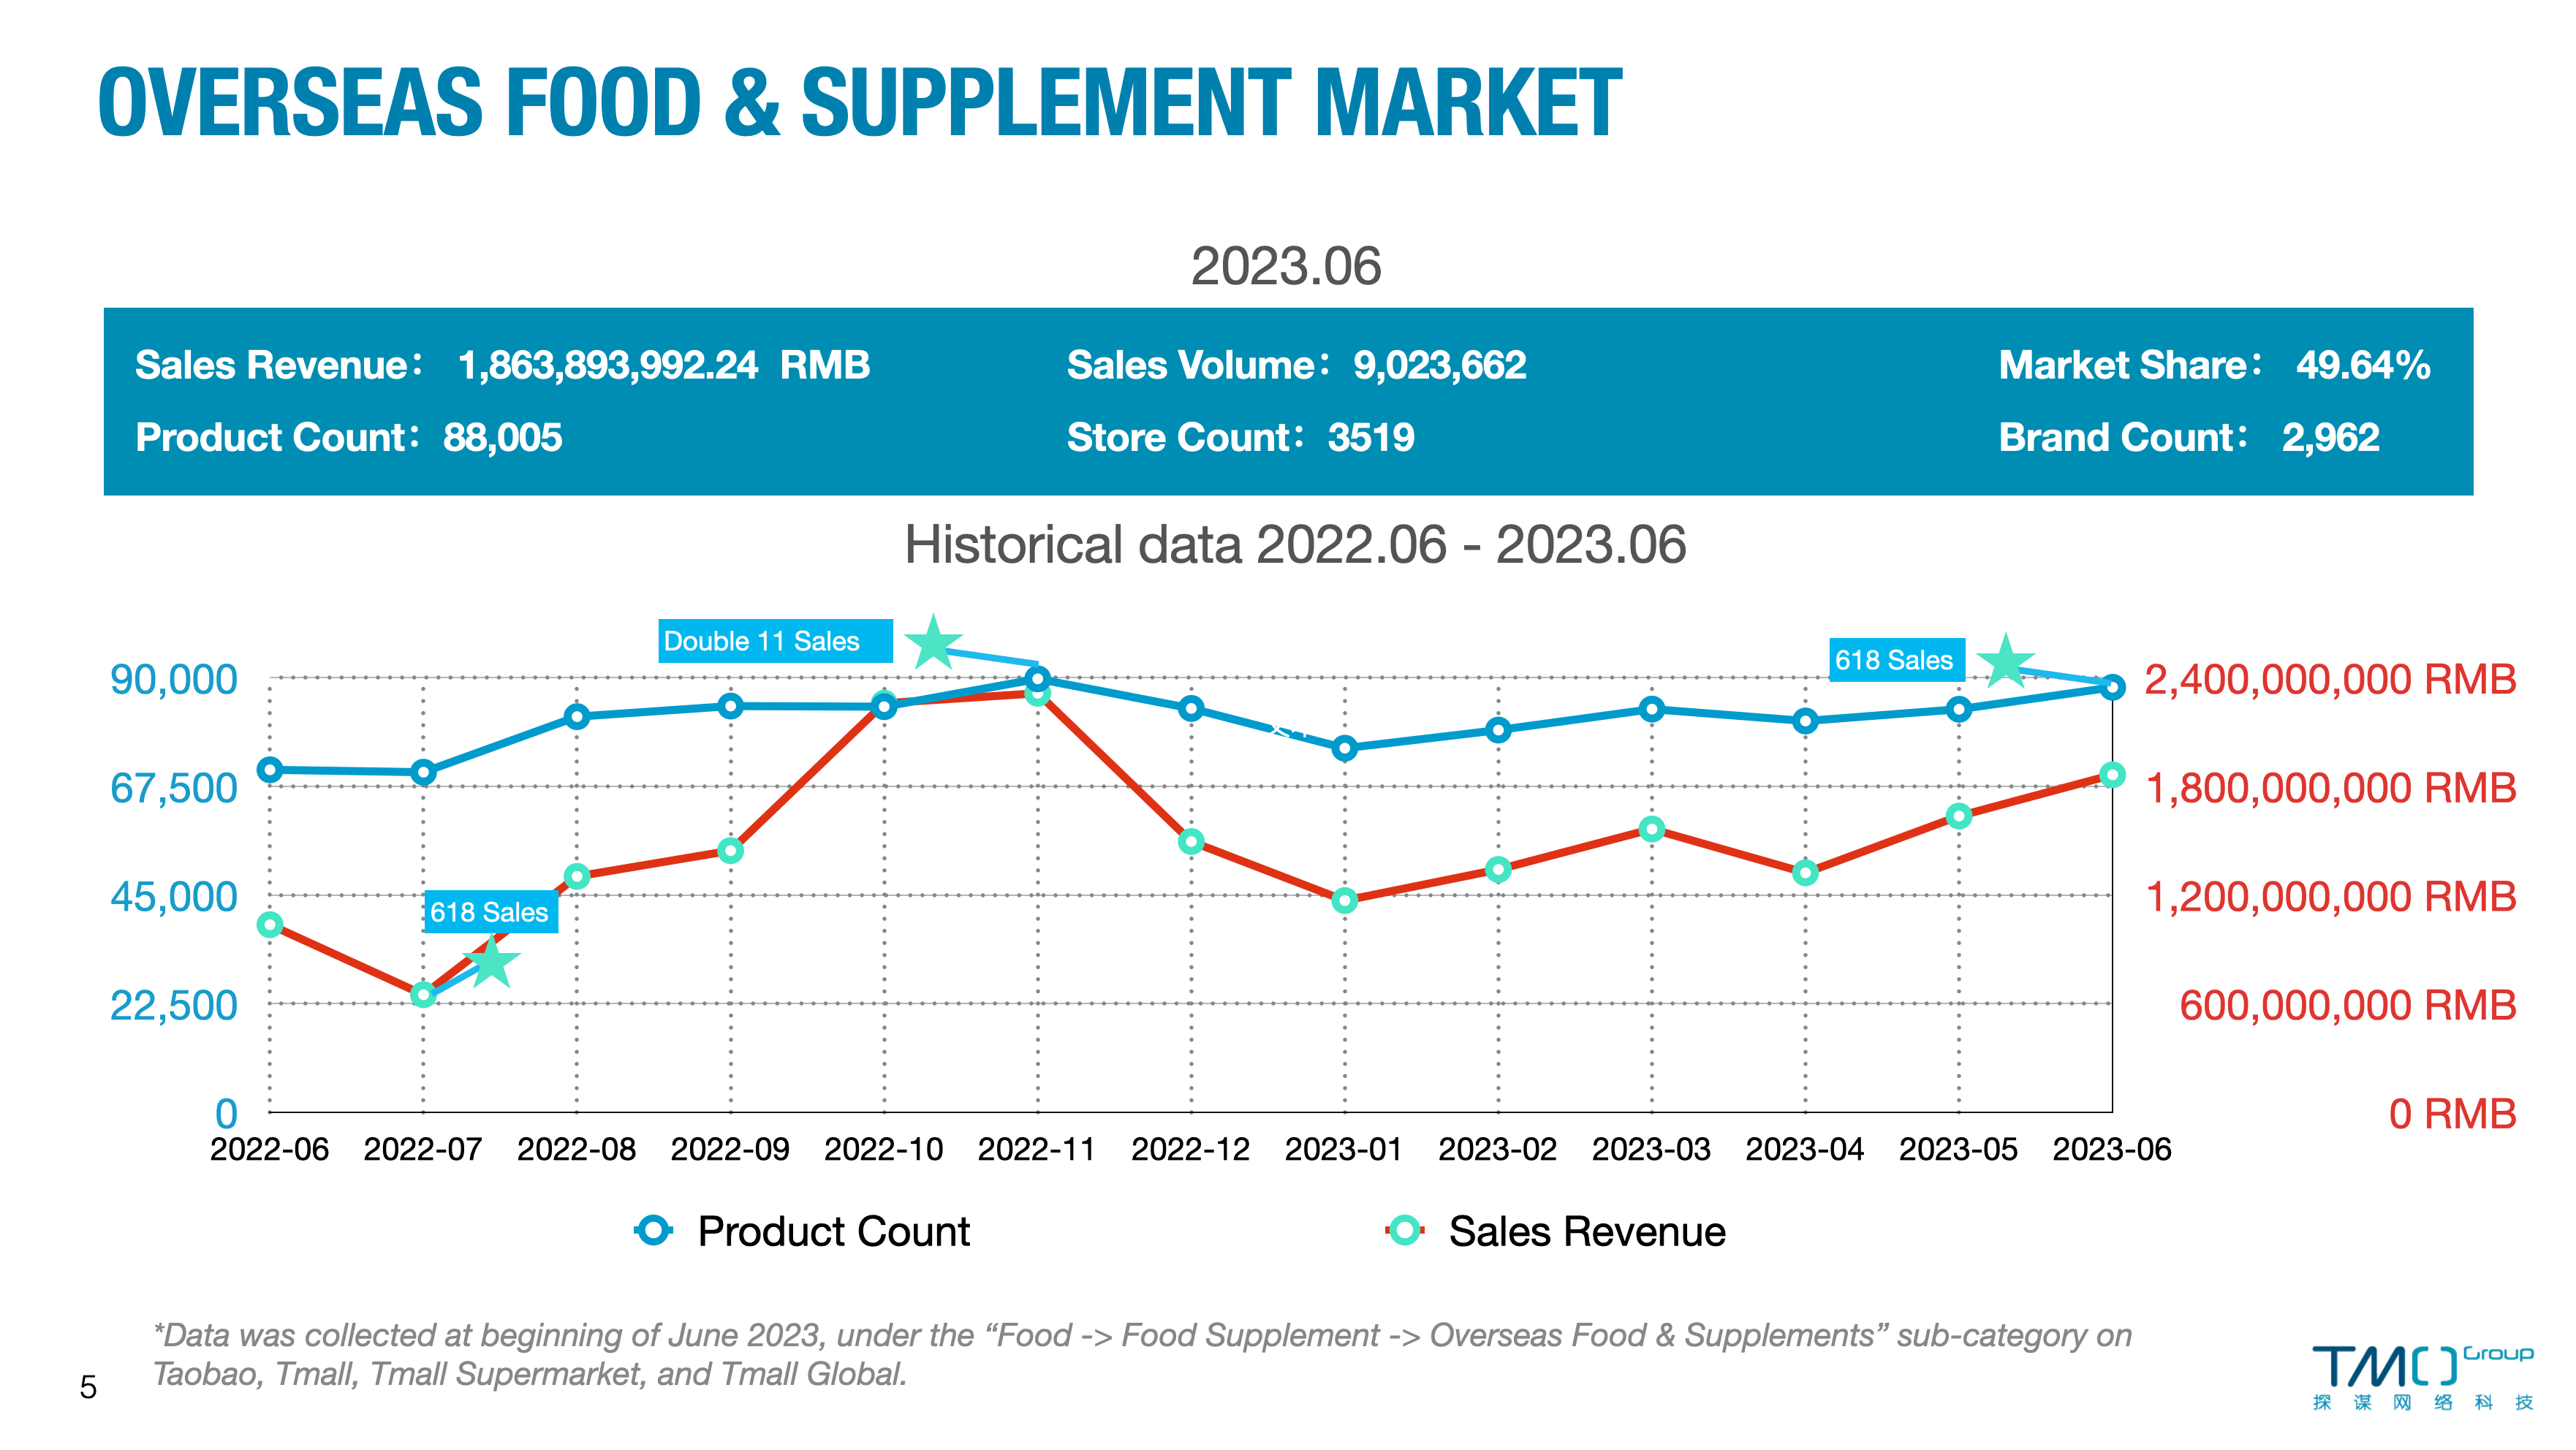 TMALL health supplement market overview